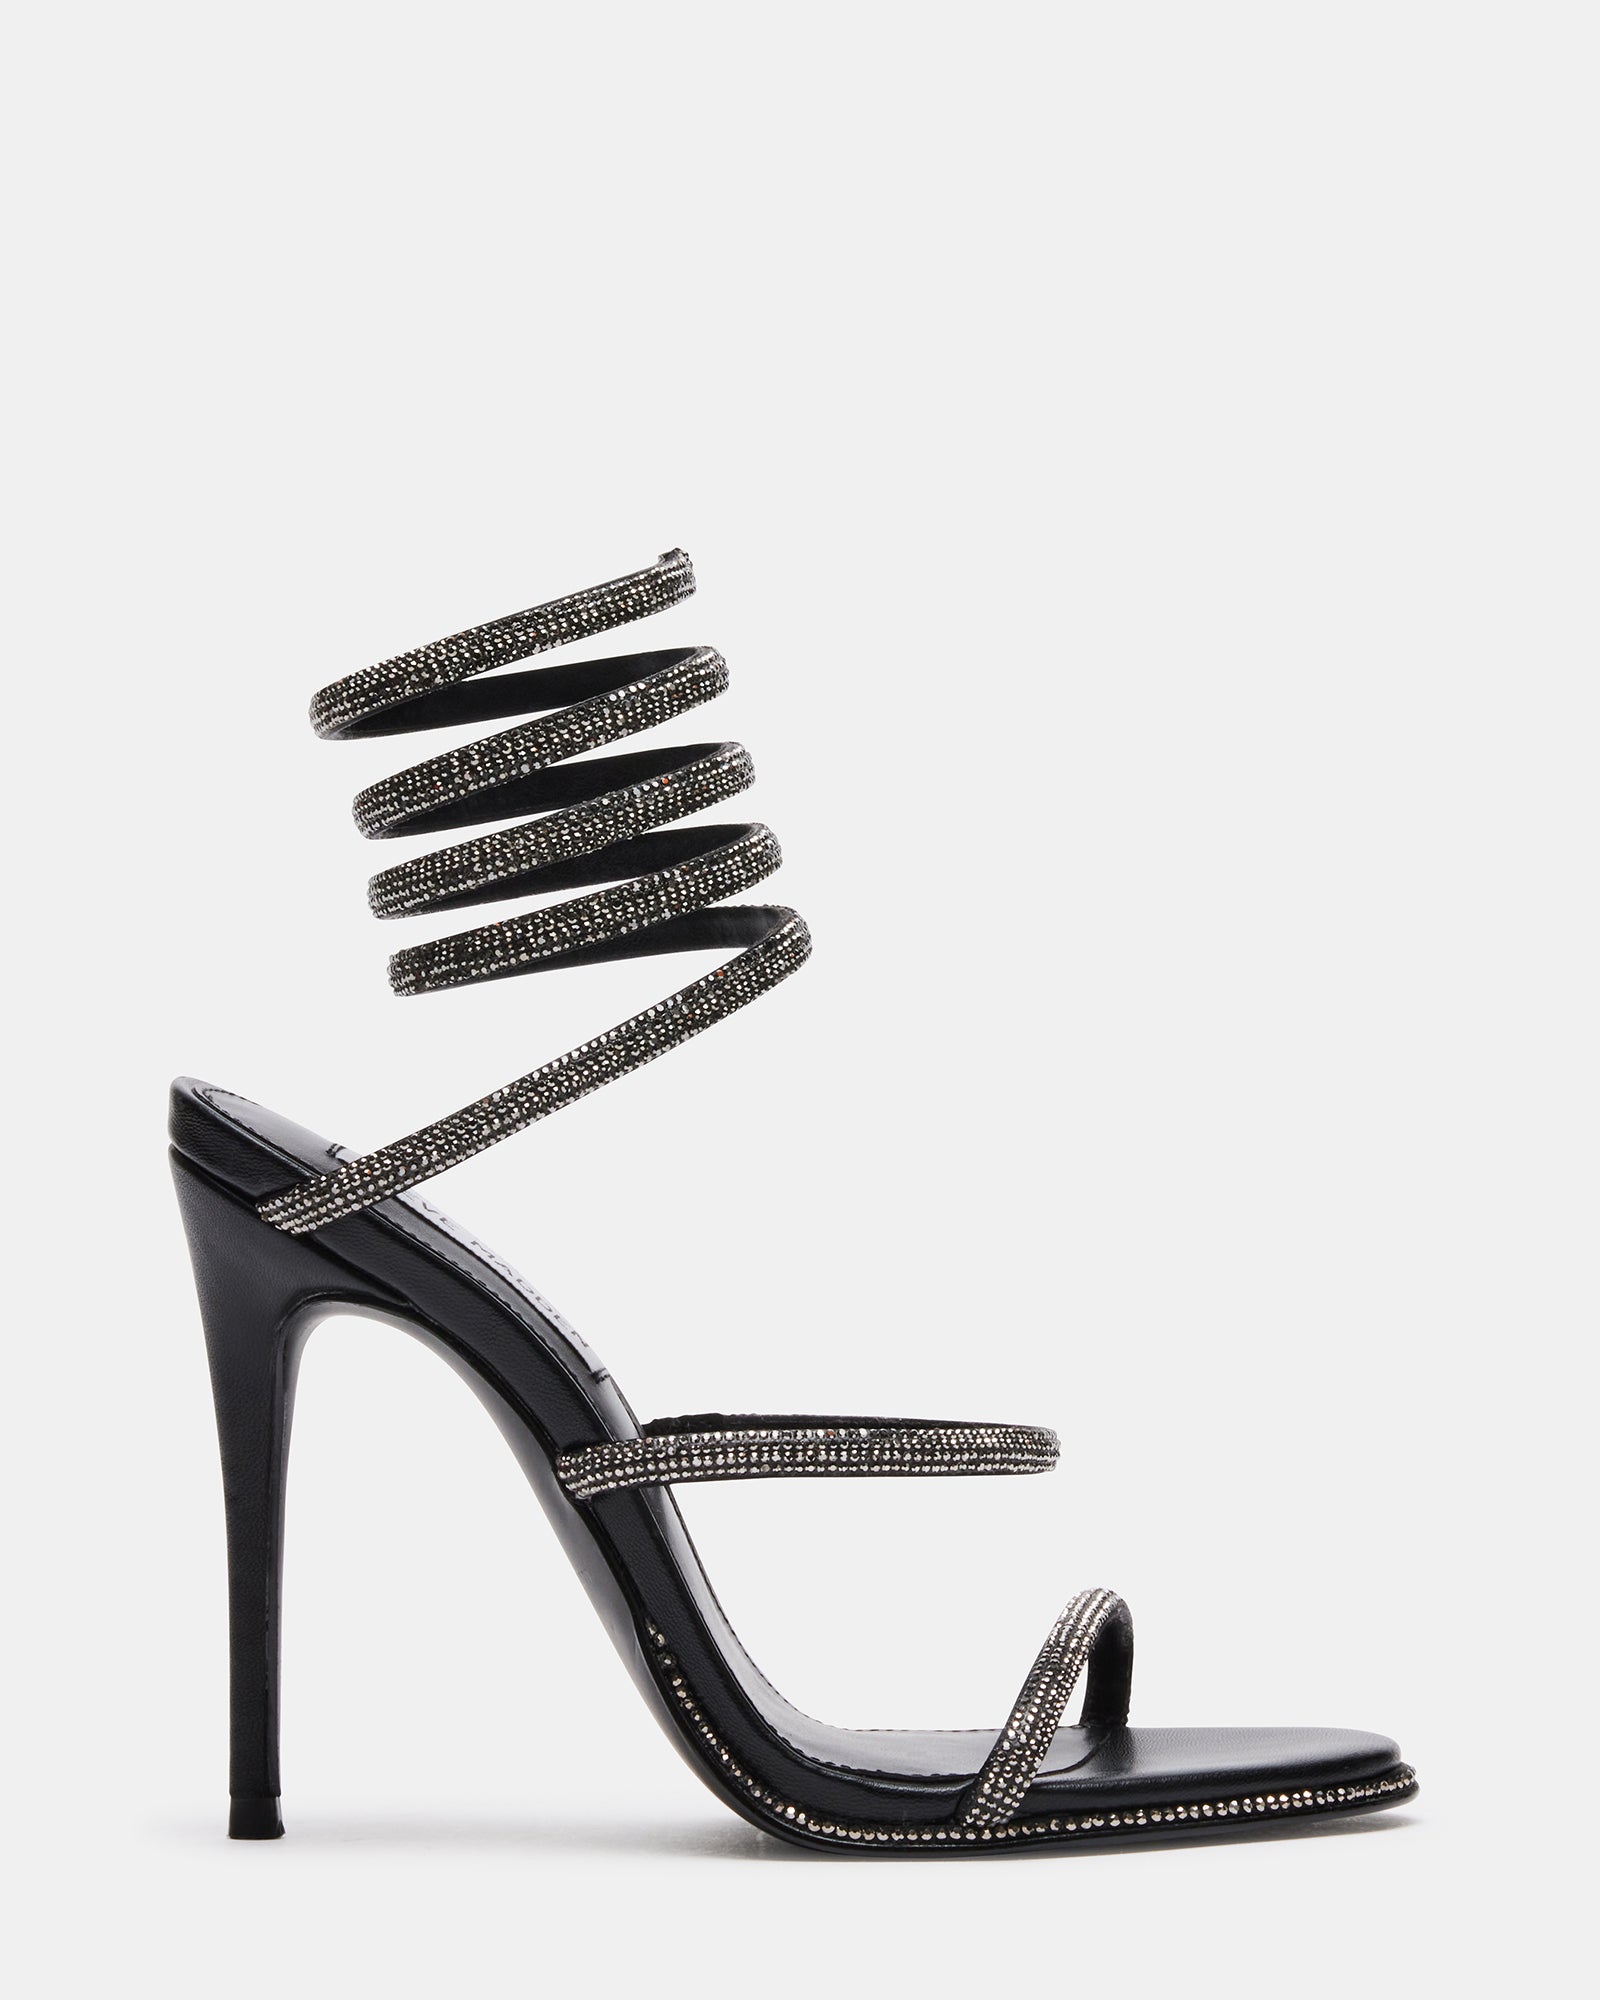 ENVIOUS Black Leather Strappy Square Toe Heel | Women's Heels – Steve Madden